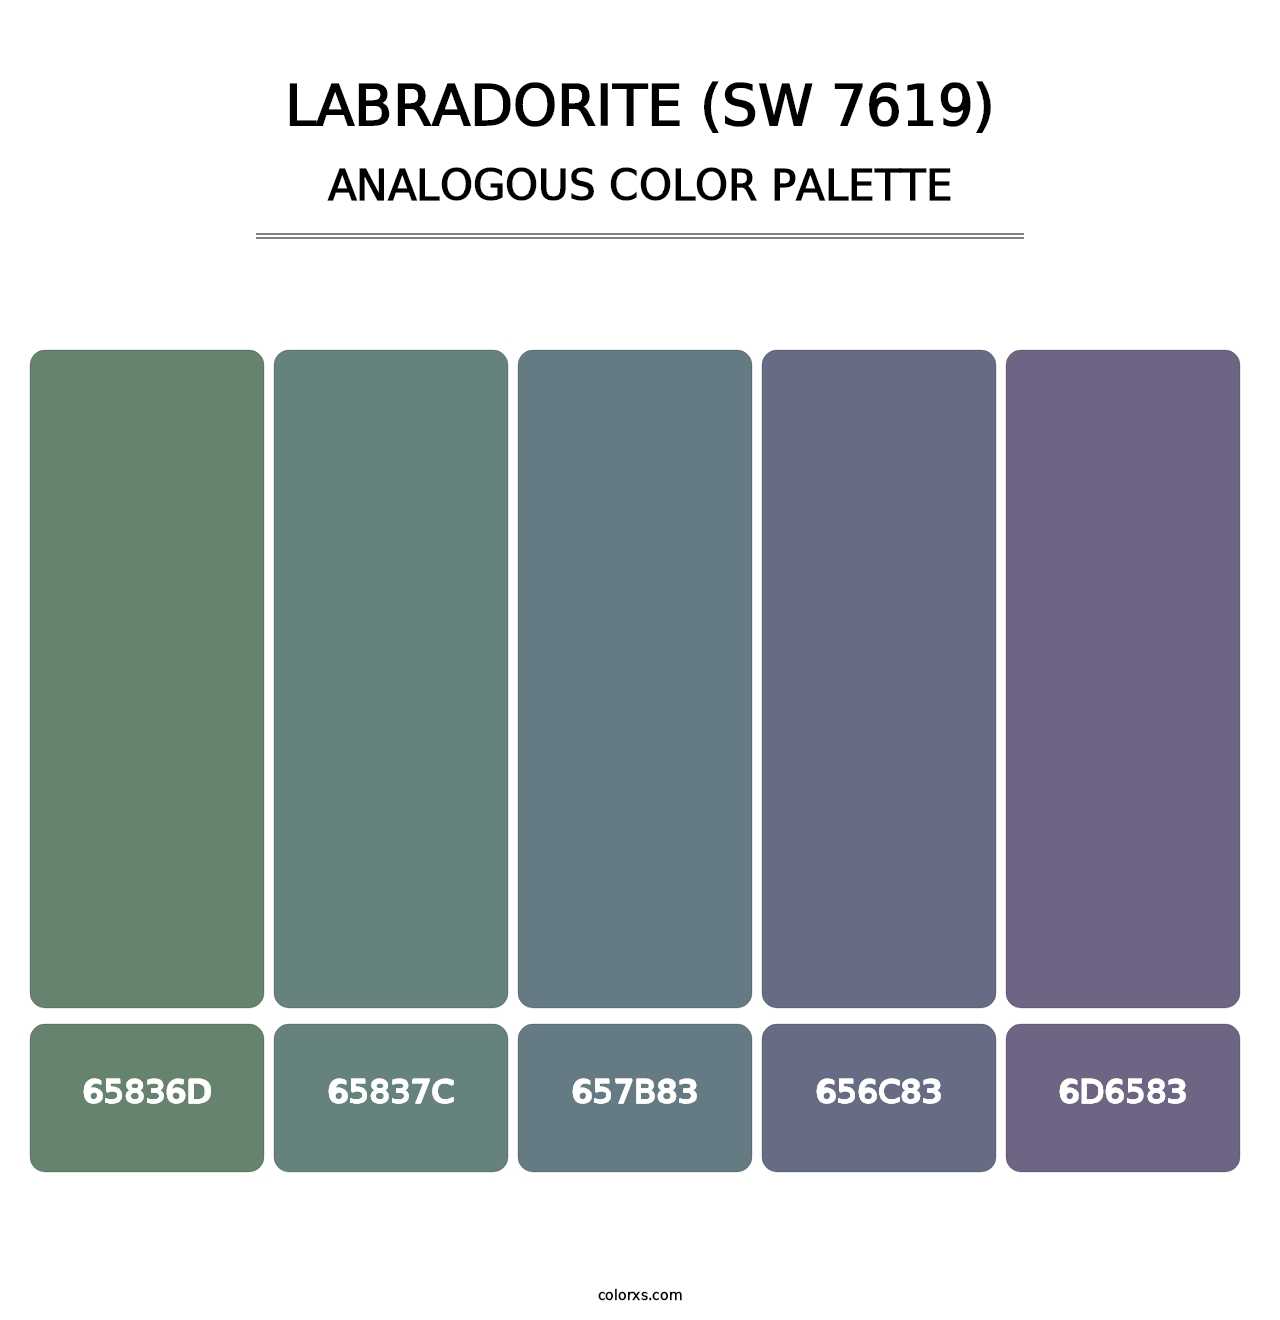 Labradorite (SW 7619) - Analogous Color Palette